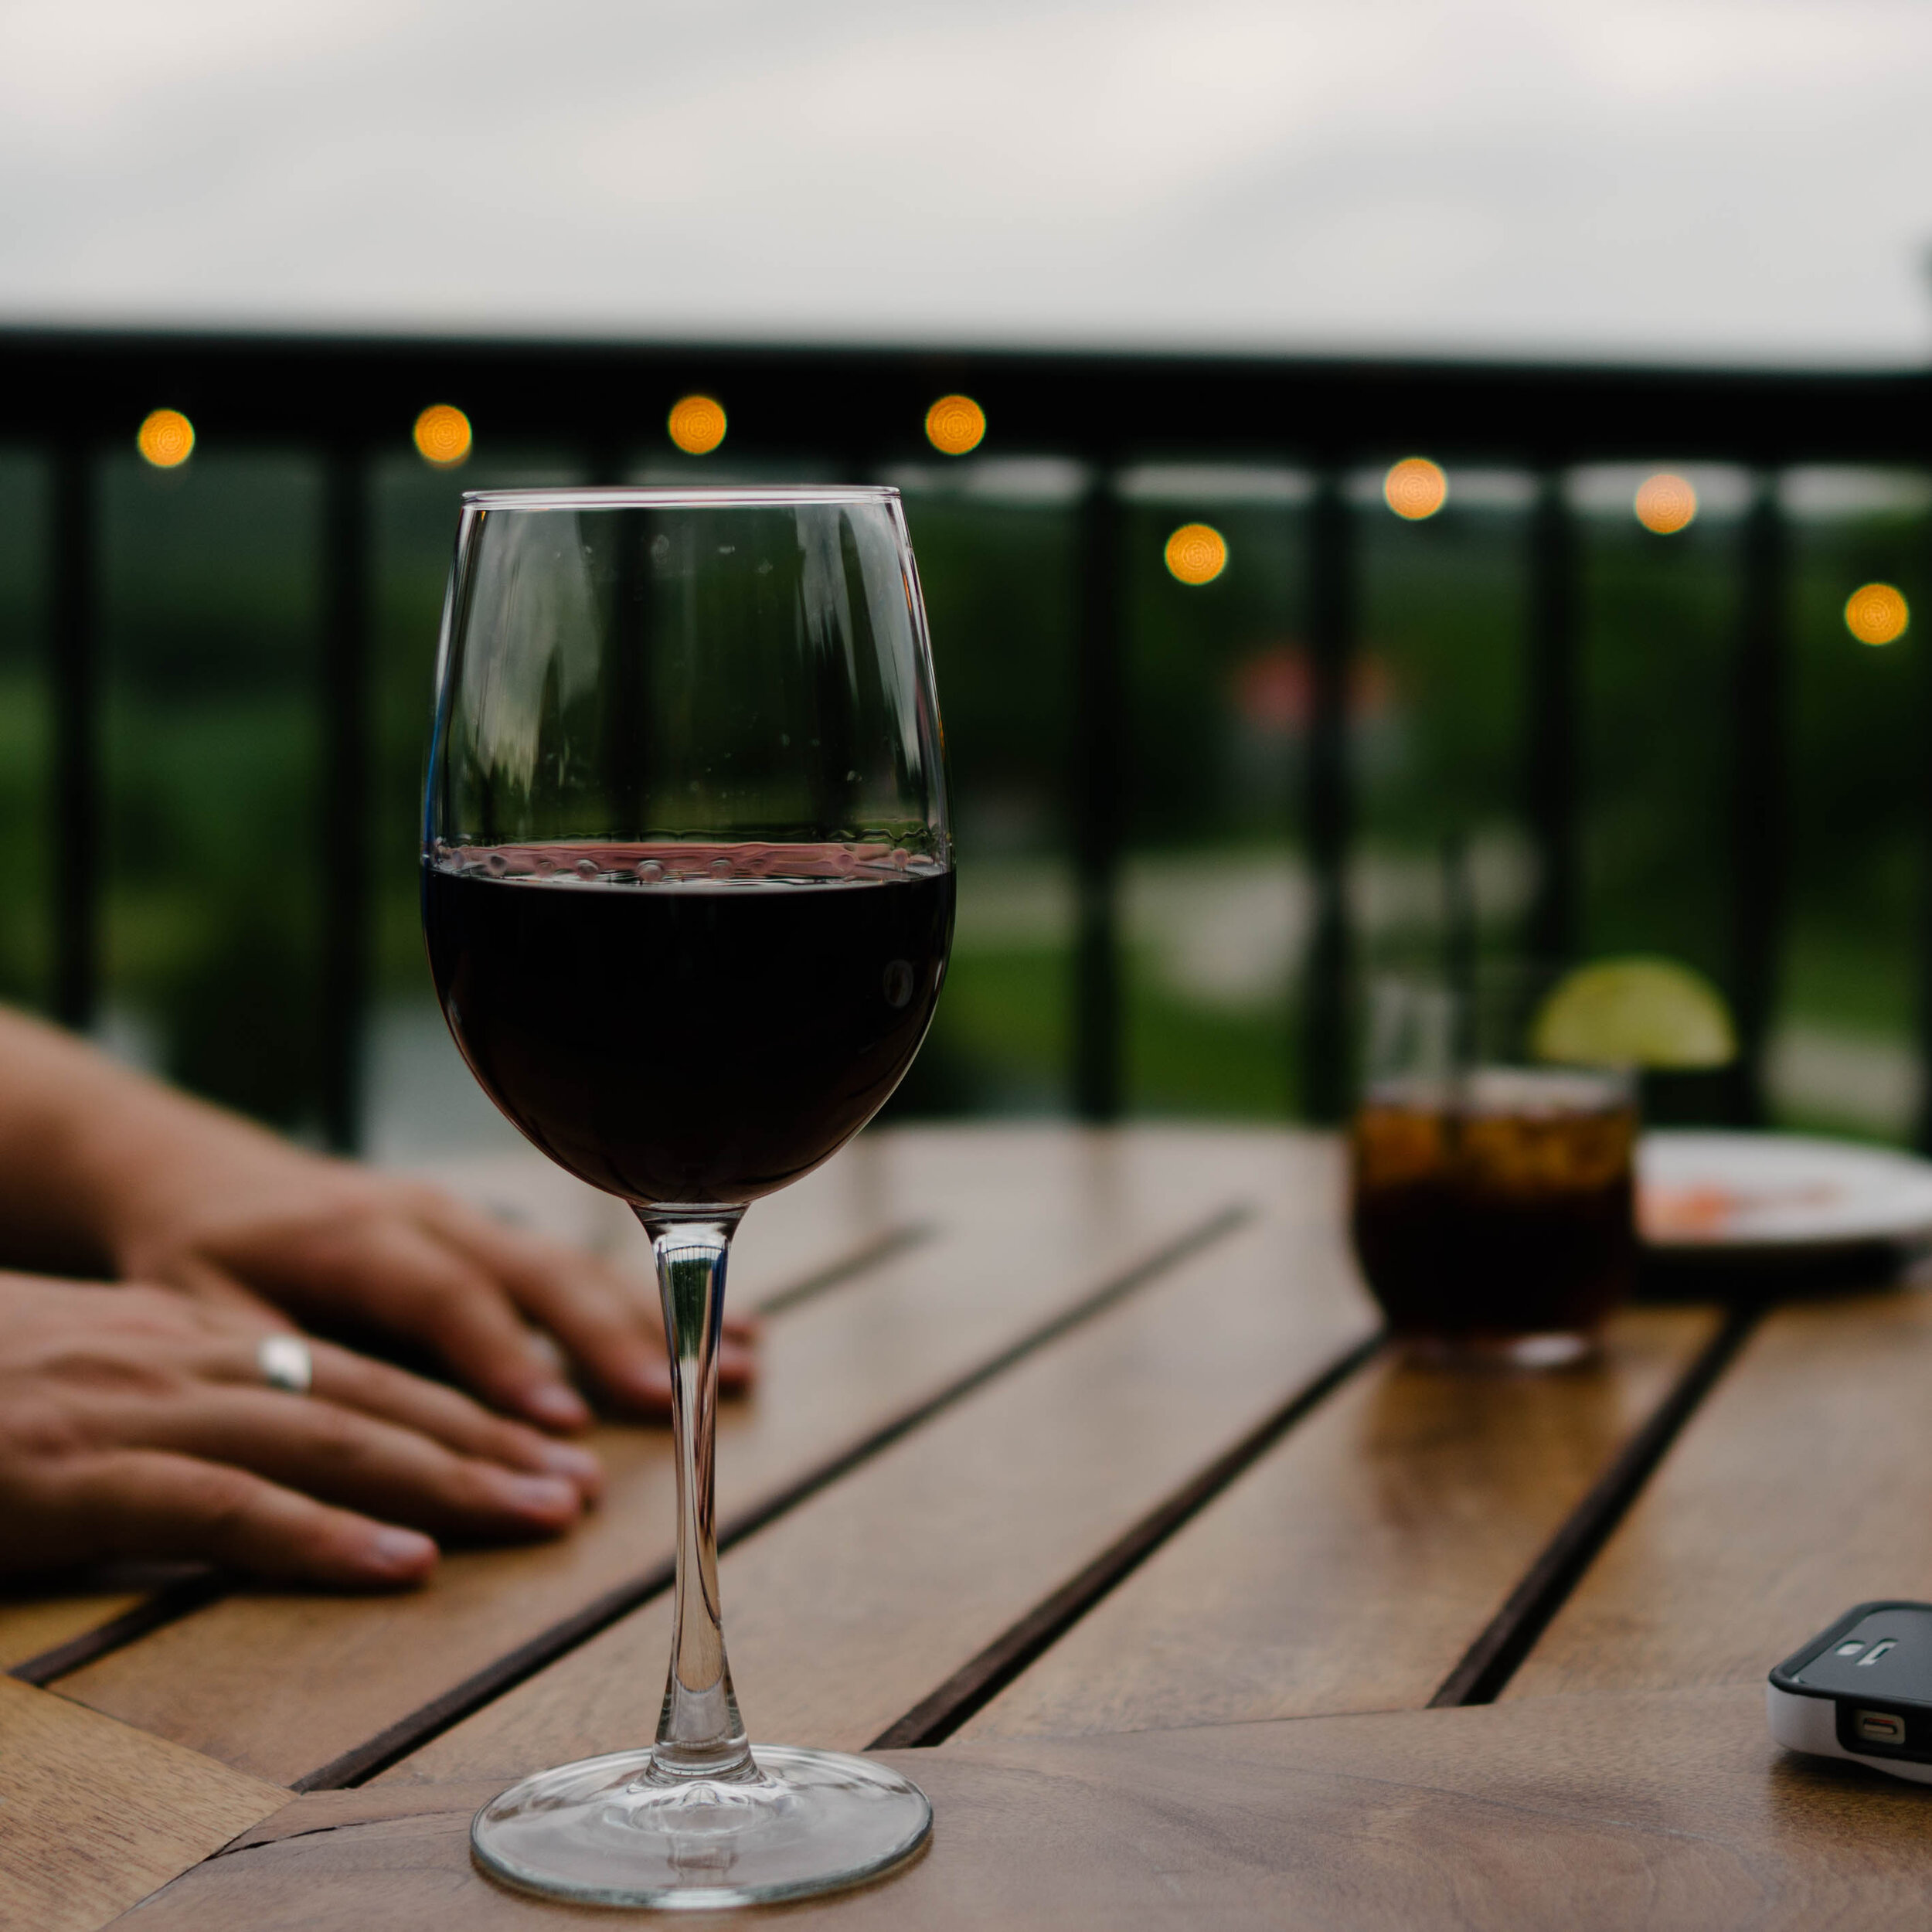 wine stress hormonal imbalance